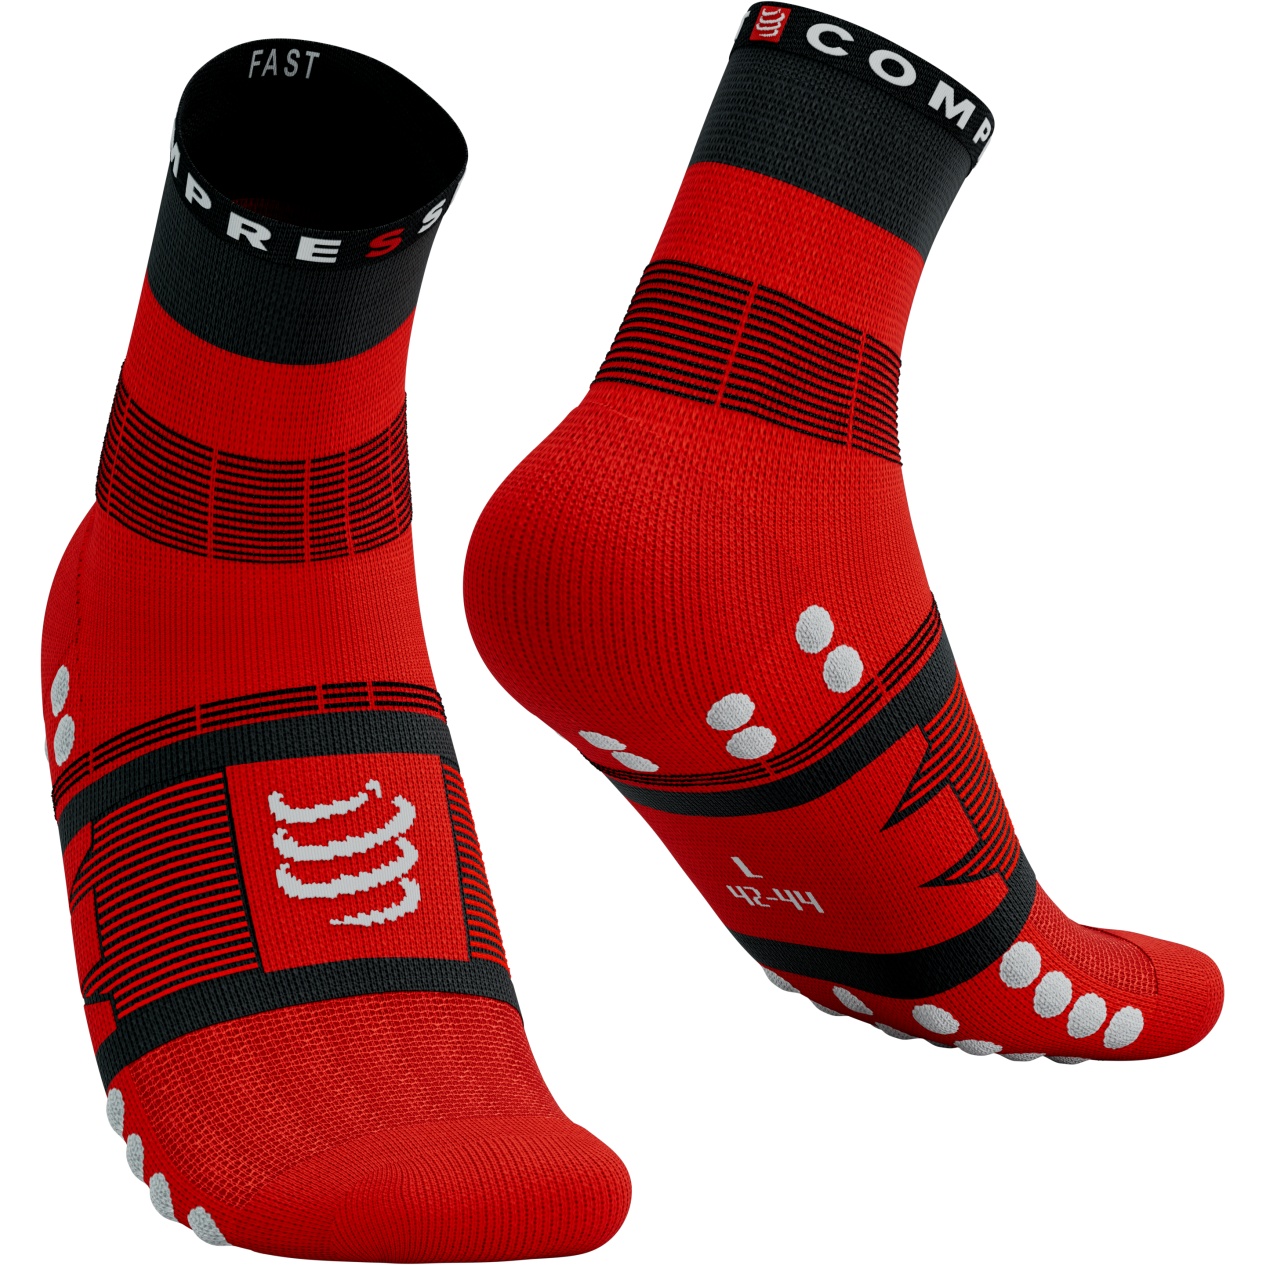 Image of Compressport Fast Hiking Socks - black/high risk red